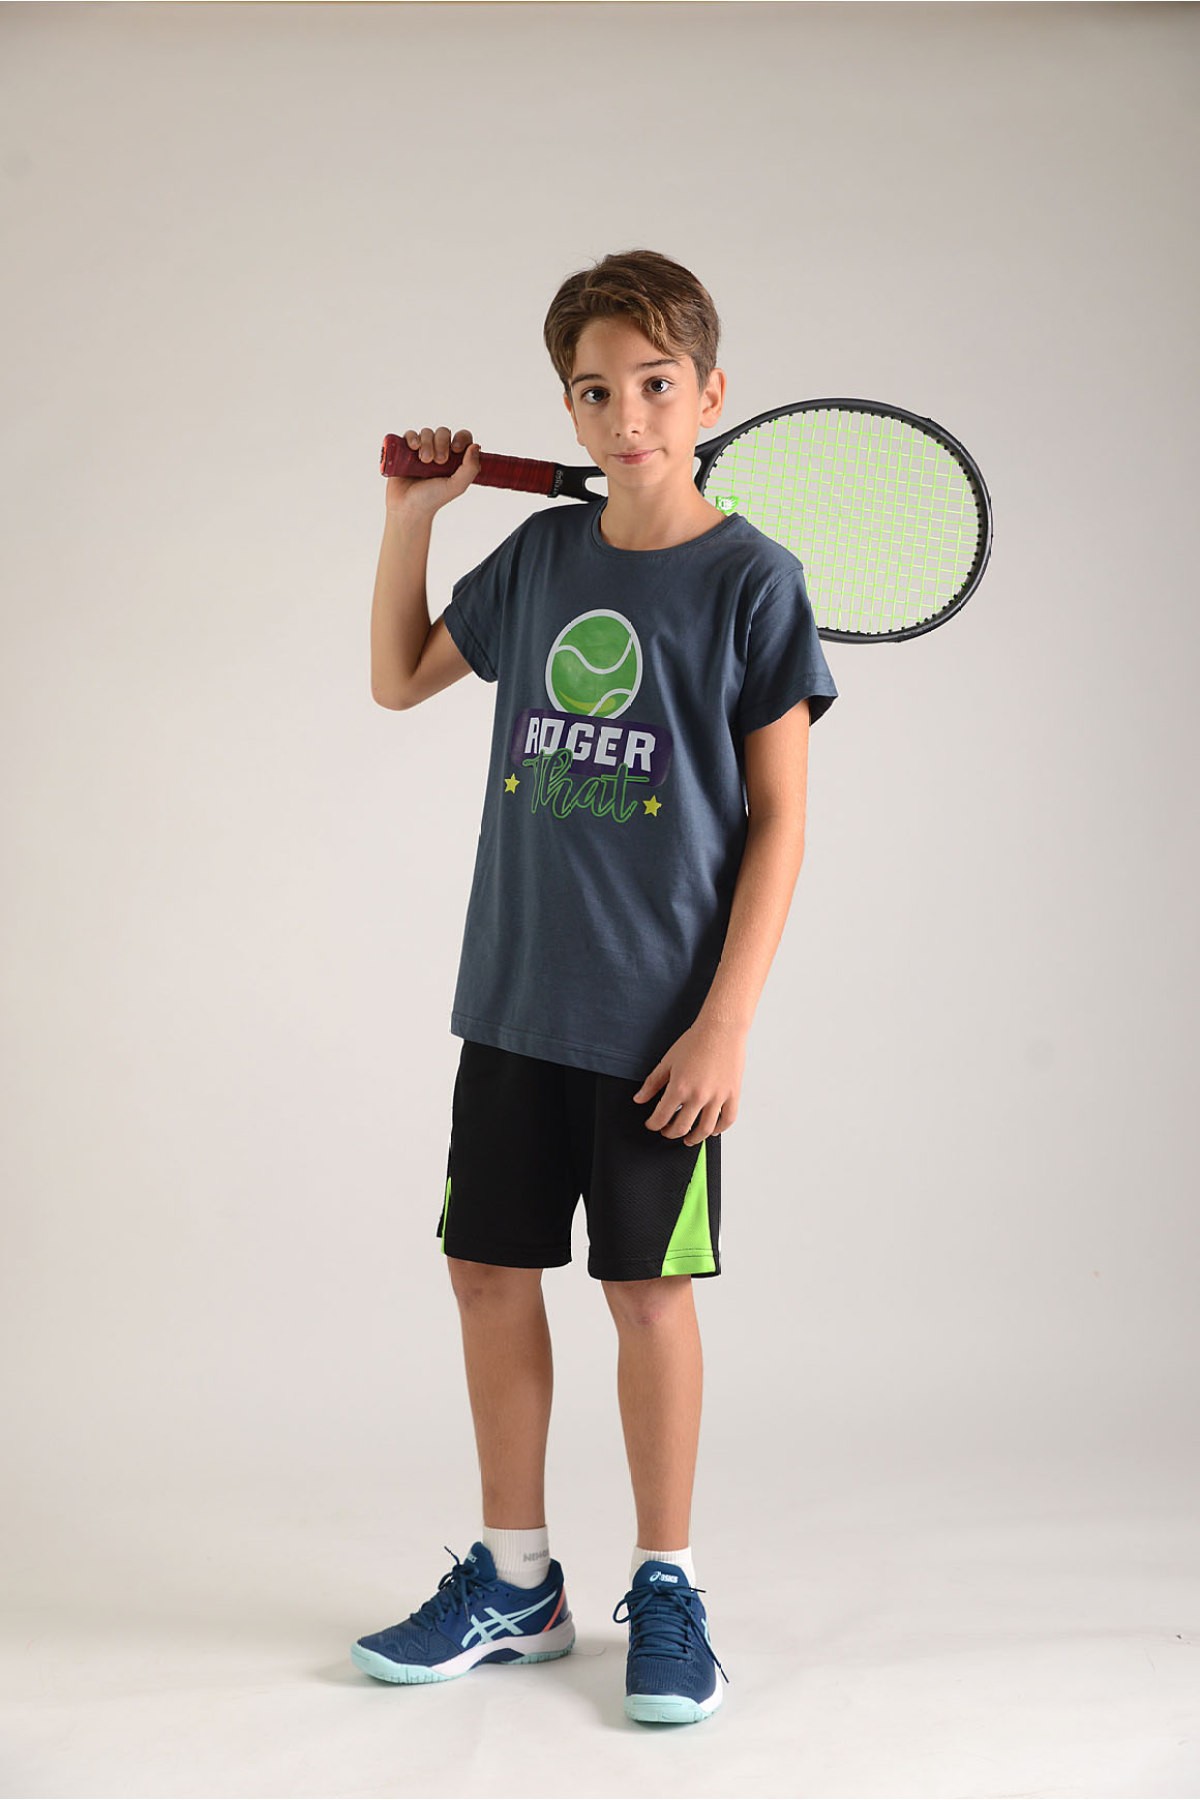 Unisex Çocuk Pamuklu Tenis Temalı Baskılı Tshirt  "Roger That" Gri